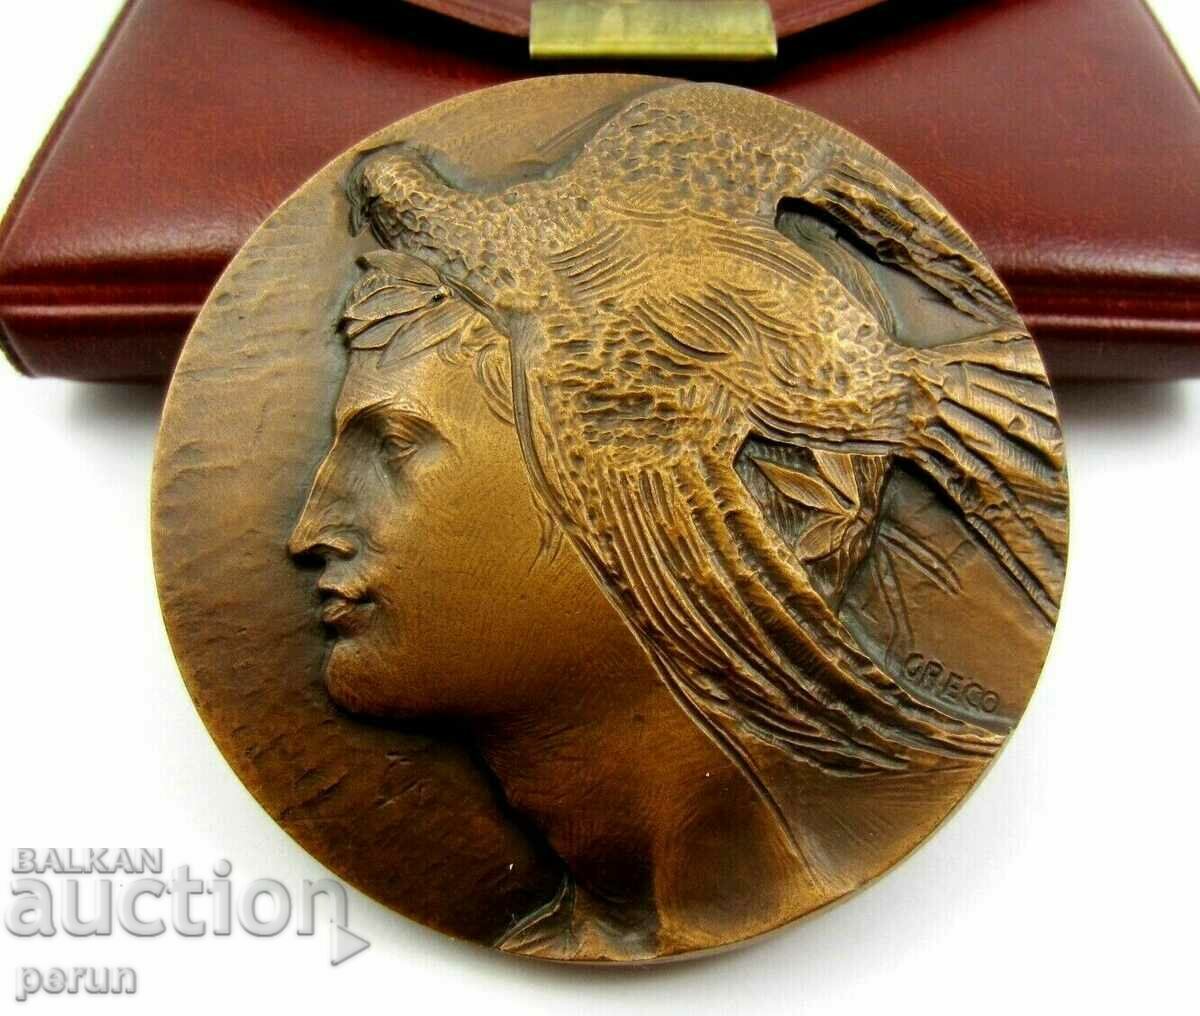 Italia - Medalie Comemorativă de Bronz - 2000. Arcul de Triumf Av